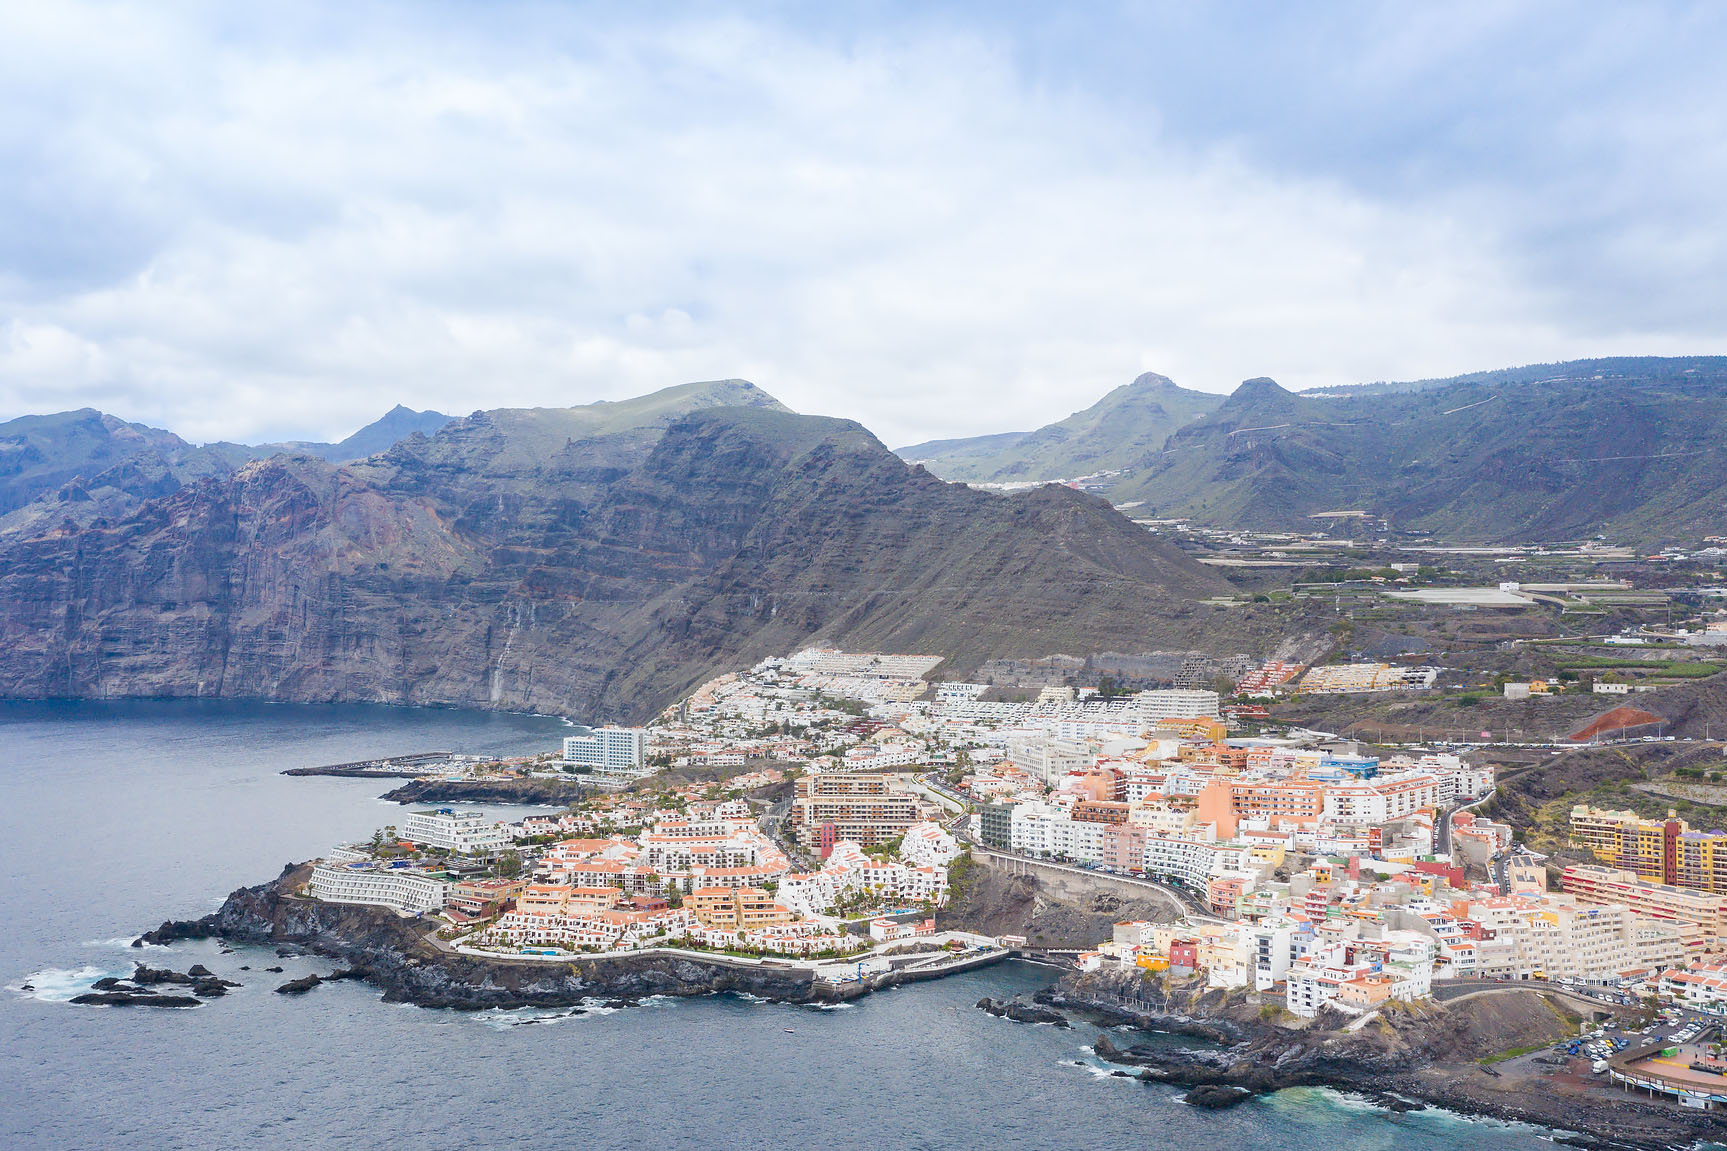 Aerial view of Puerto de Santiago, Tenerife